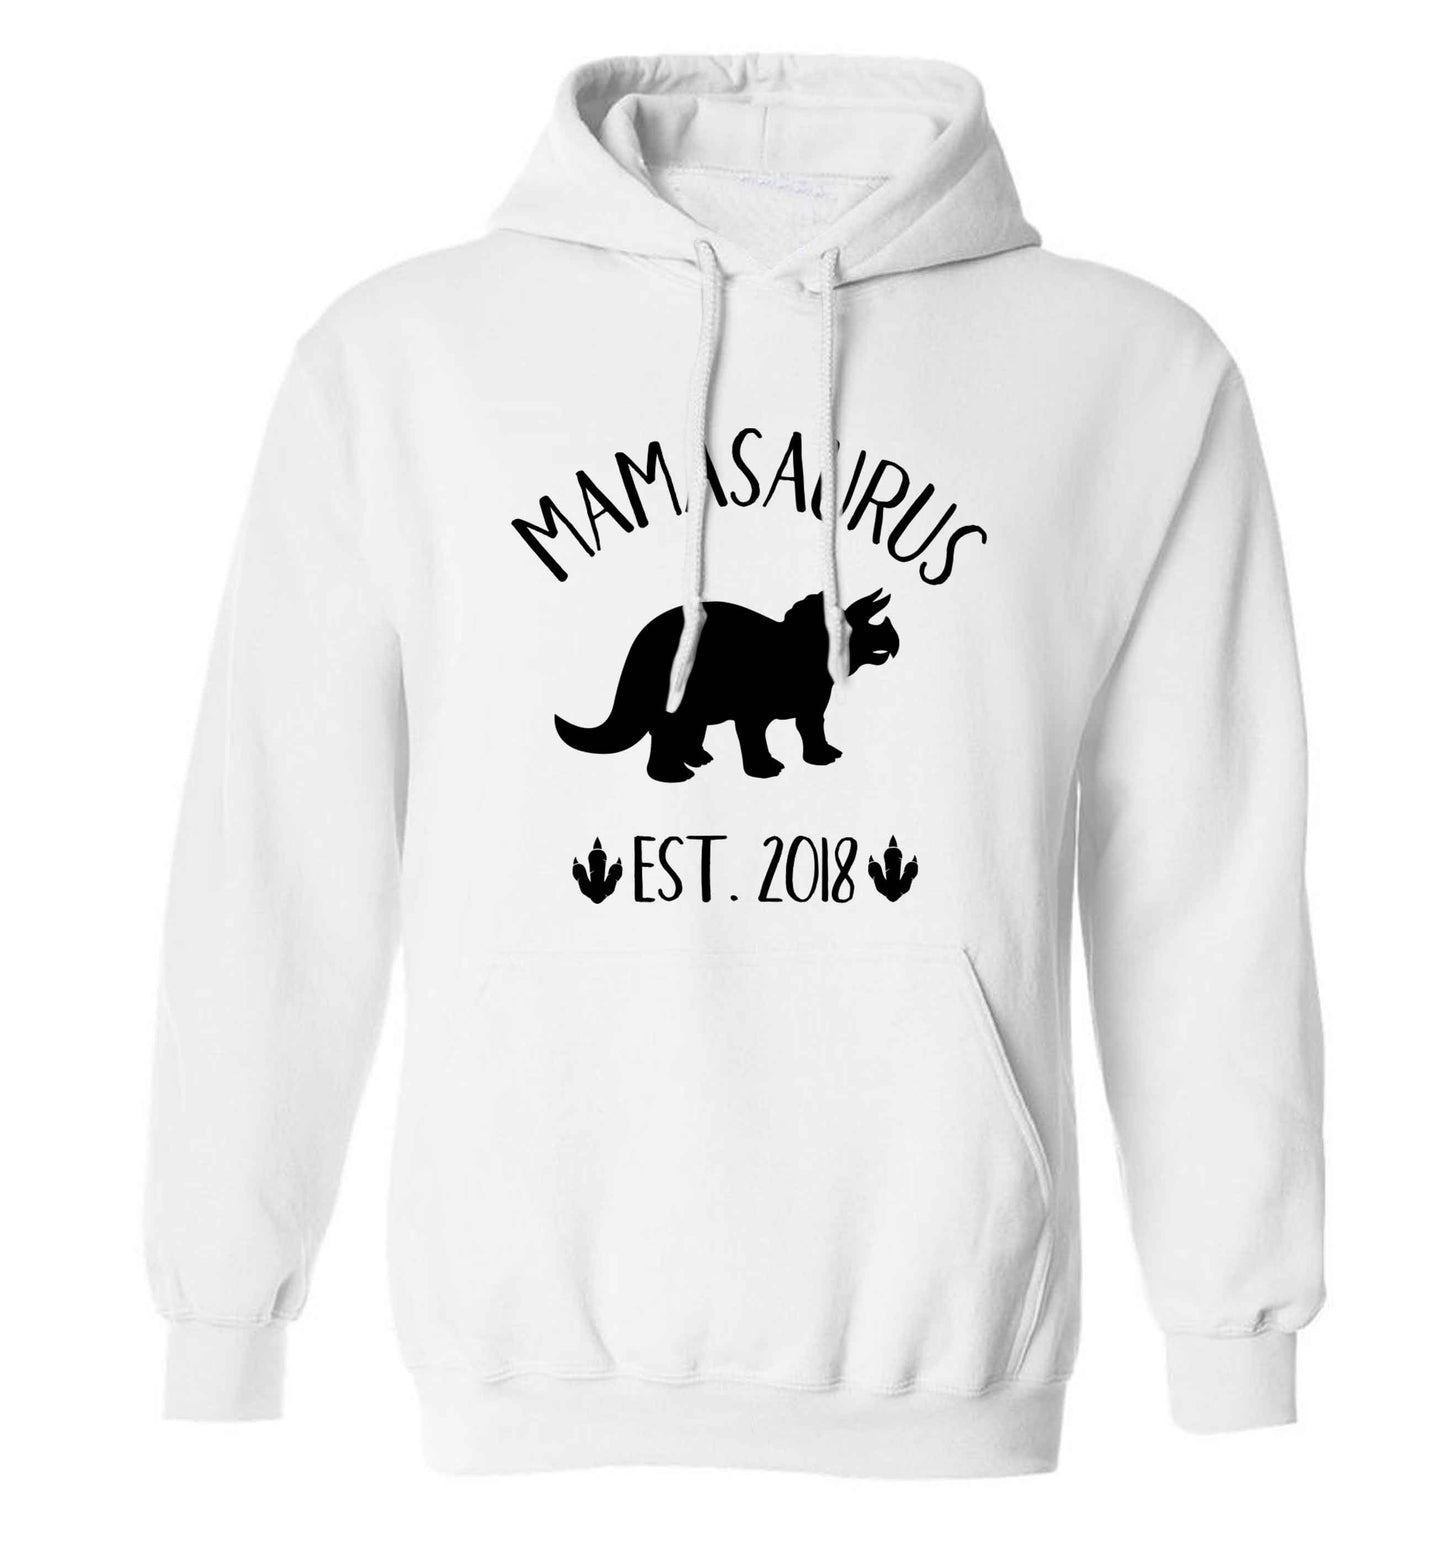 Personalised mamasaurus date adults unisex white hoodie 2XL